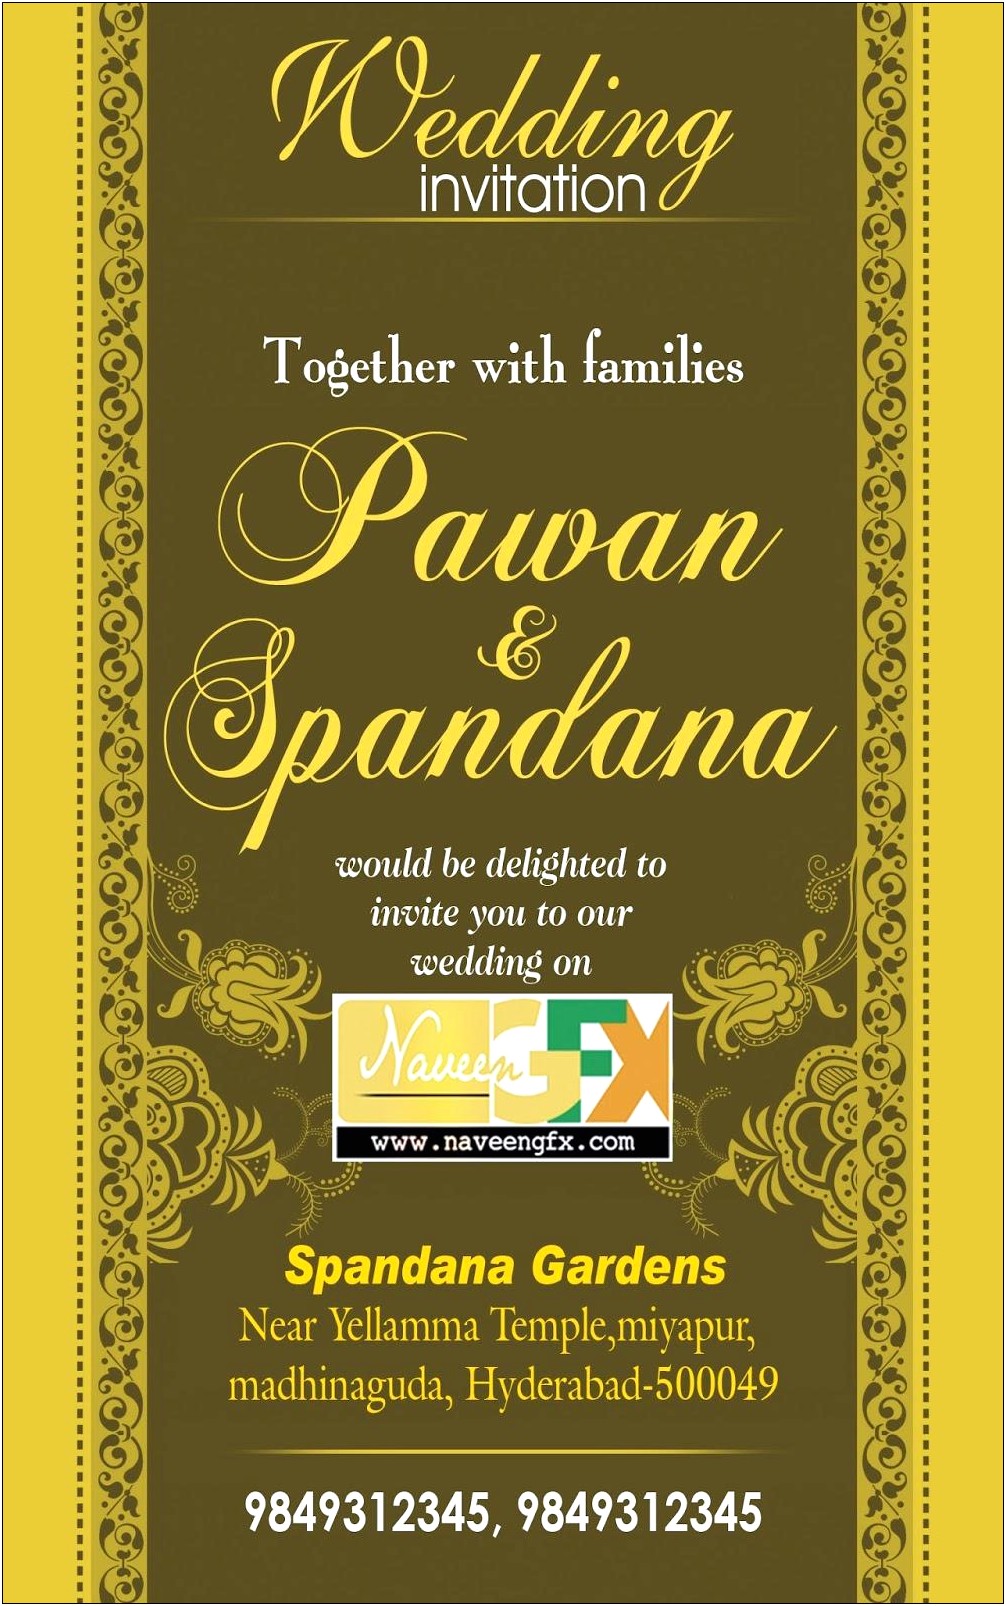 Indian Wedding Invitation Card Online Free Download